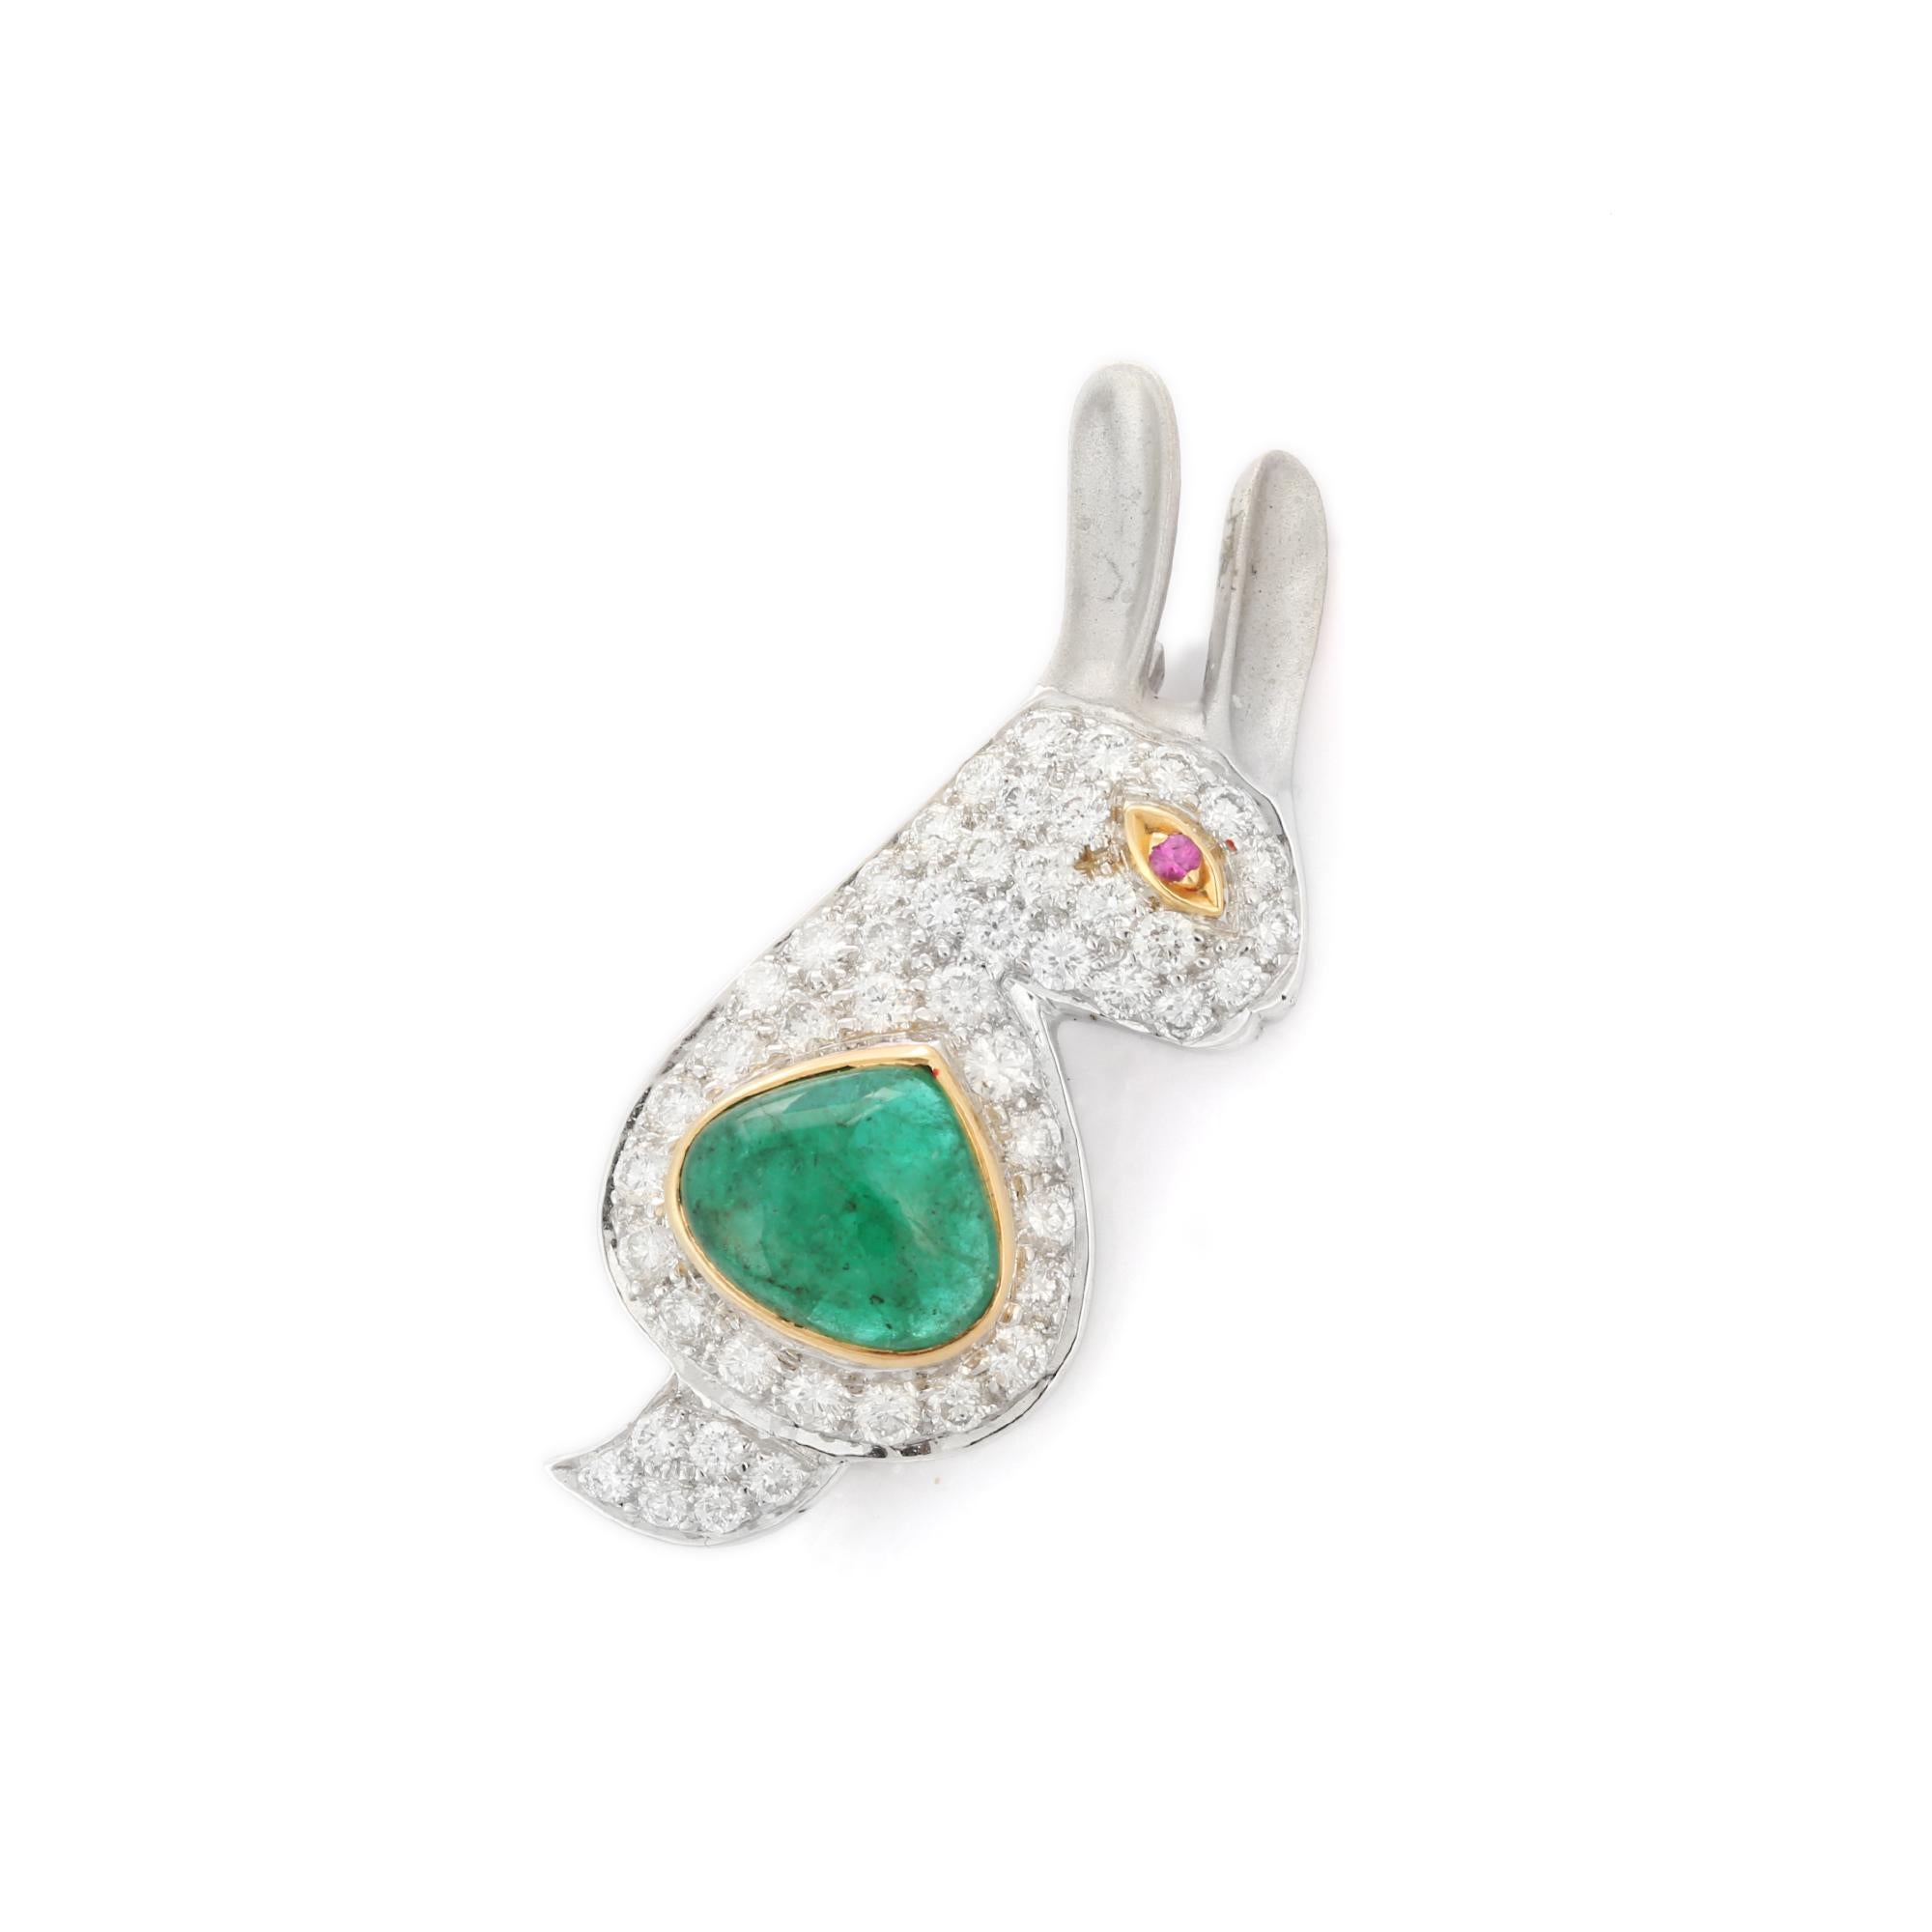 Heart Cut 2.2 Carat Emerald Diamond Rabbit Brooch in 18k Solid White Gold, Unisex Gifts